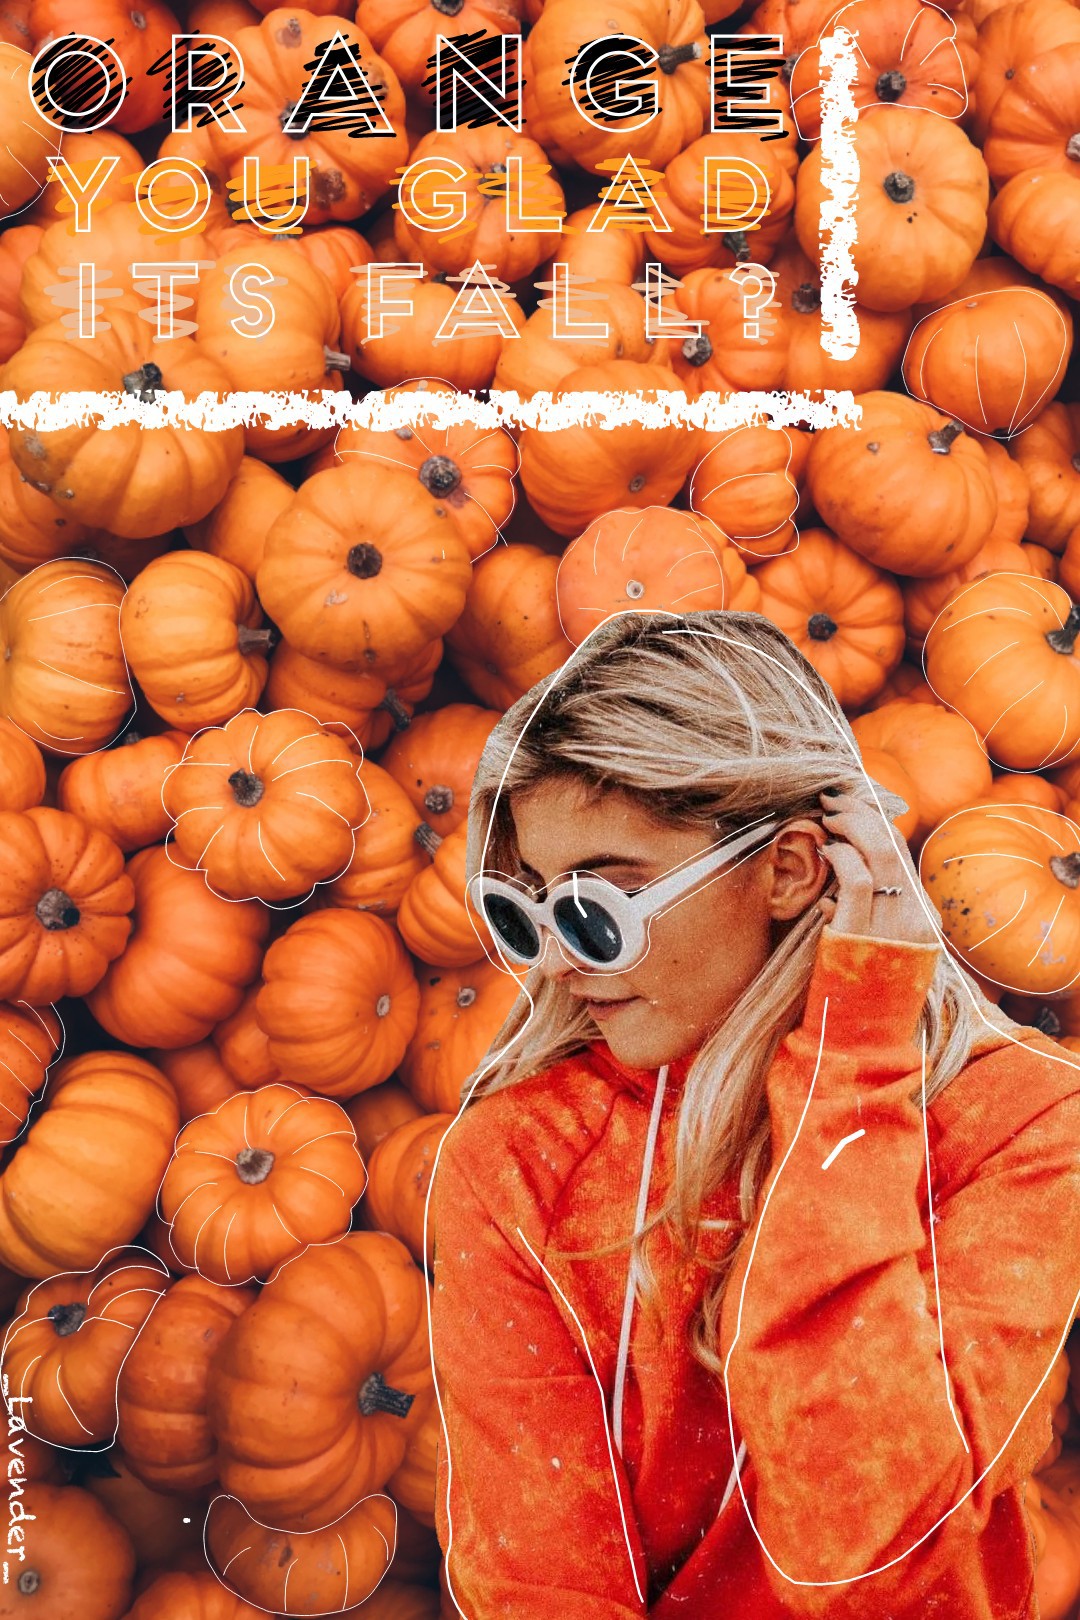 🌼TAP🌼
Orange you glad its fall? 👉👈
QOTD: Favorite season?
AOTD: ALL! 